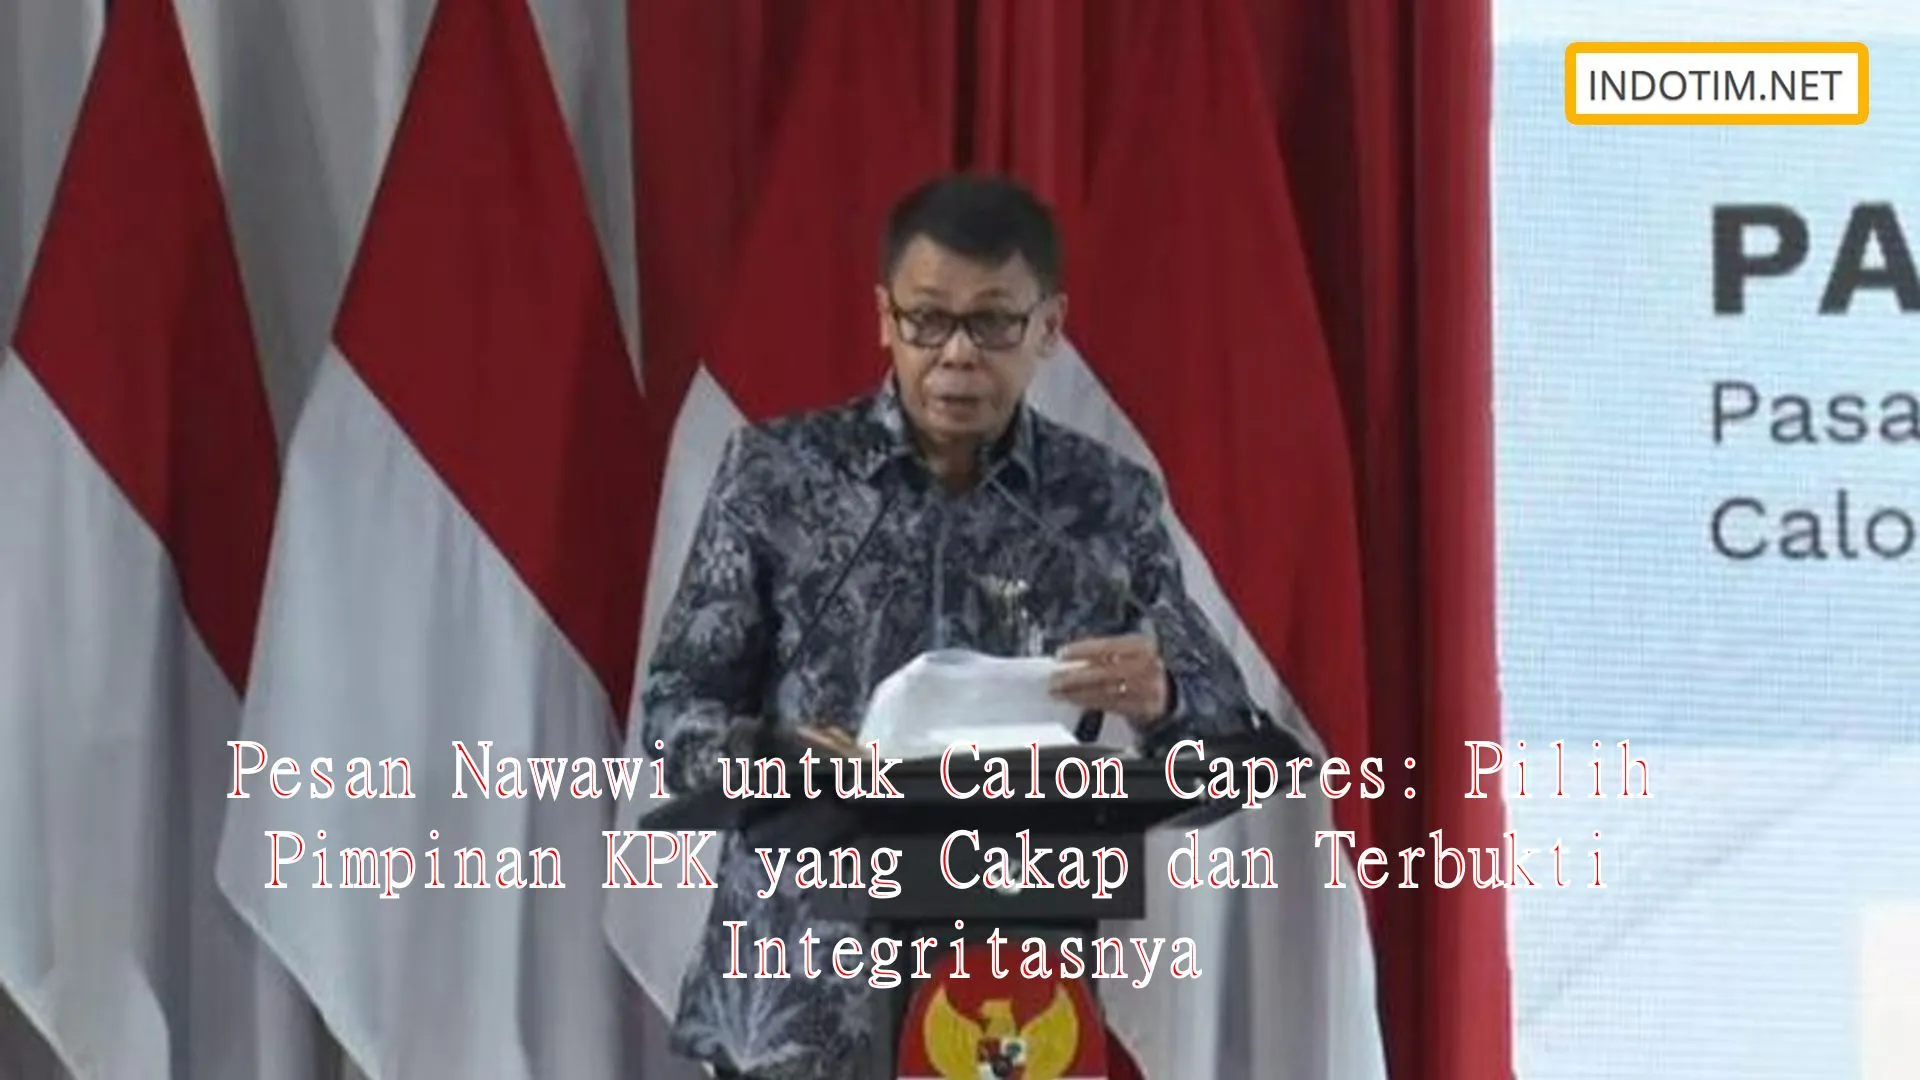 Pesan Nawawi untuk Calon Capres: Pilih Pimpinan KPK yang Cakap dan Terbukti Integritasnya